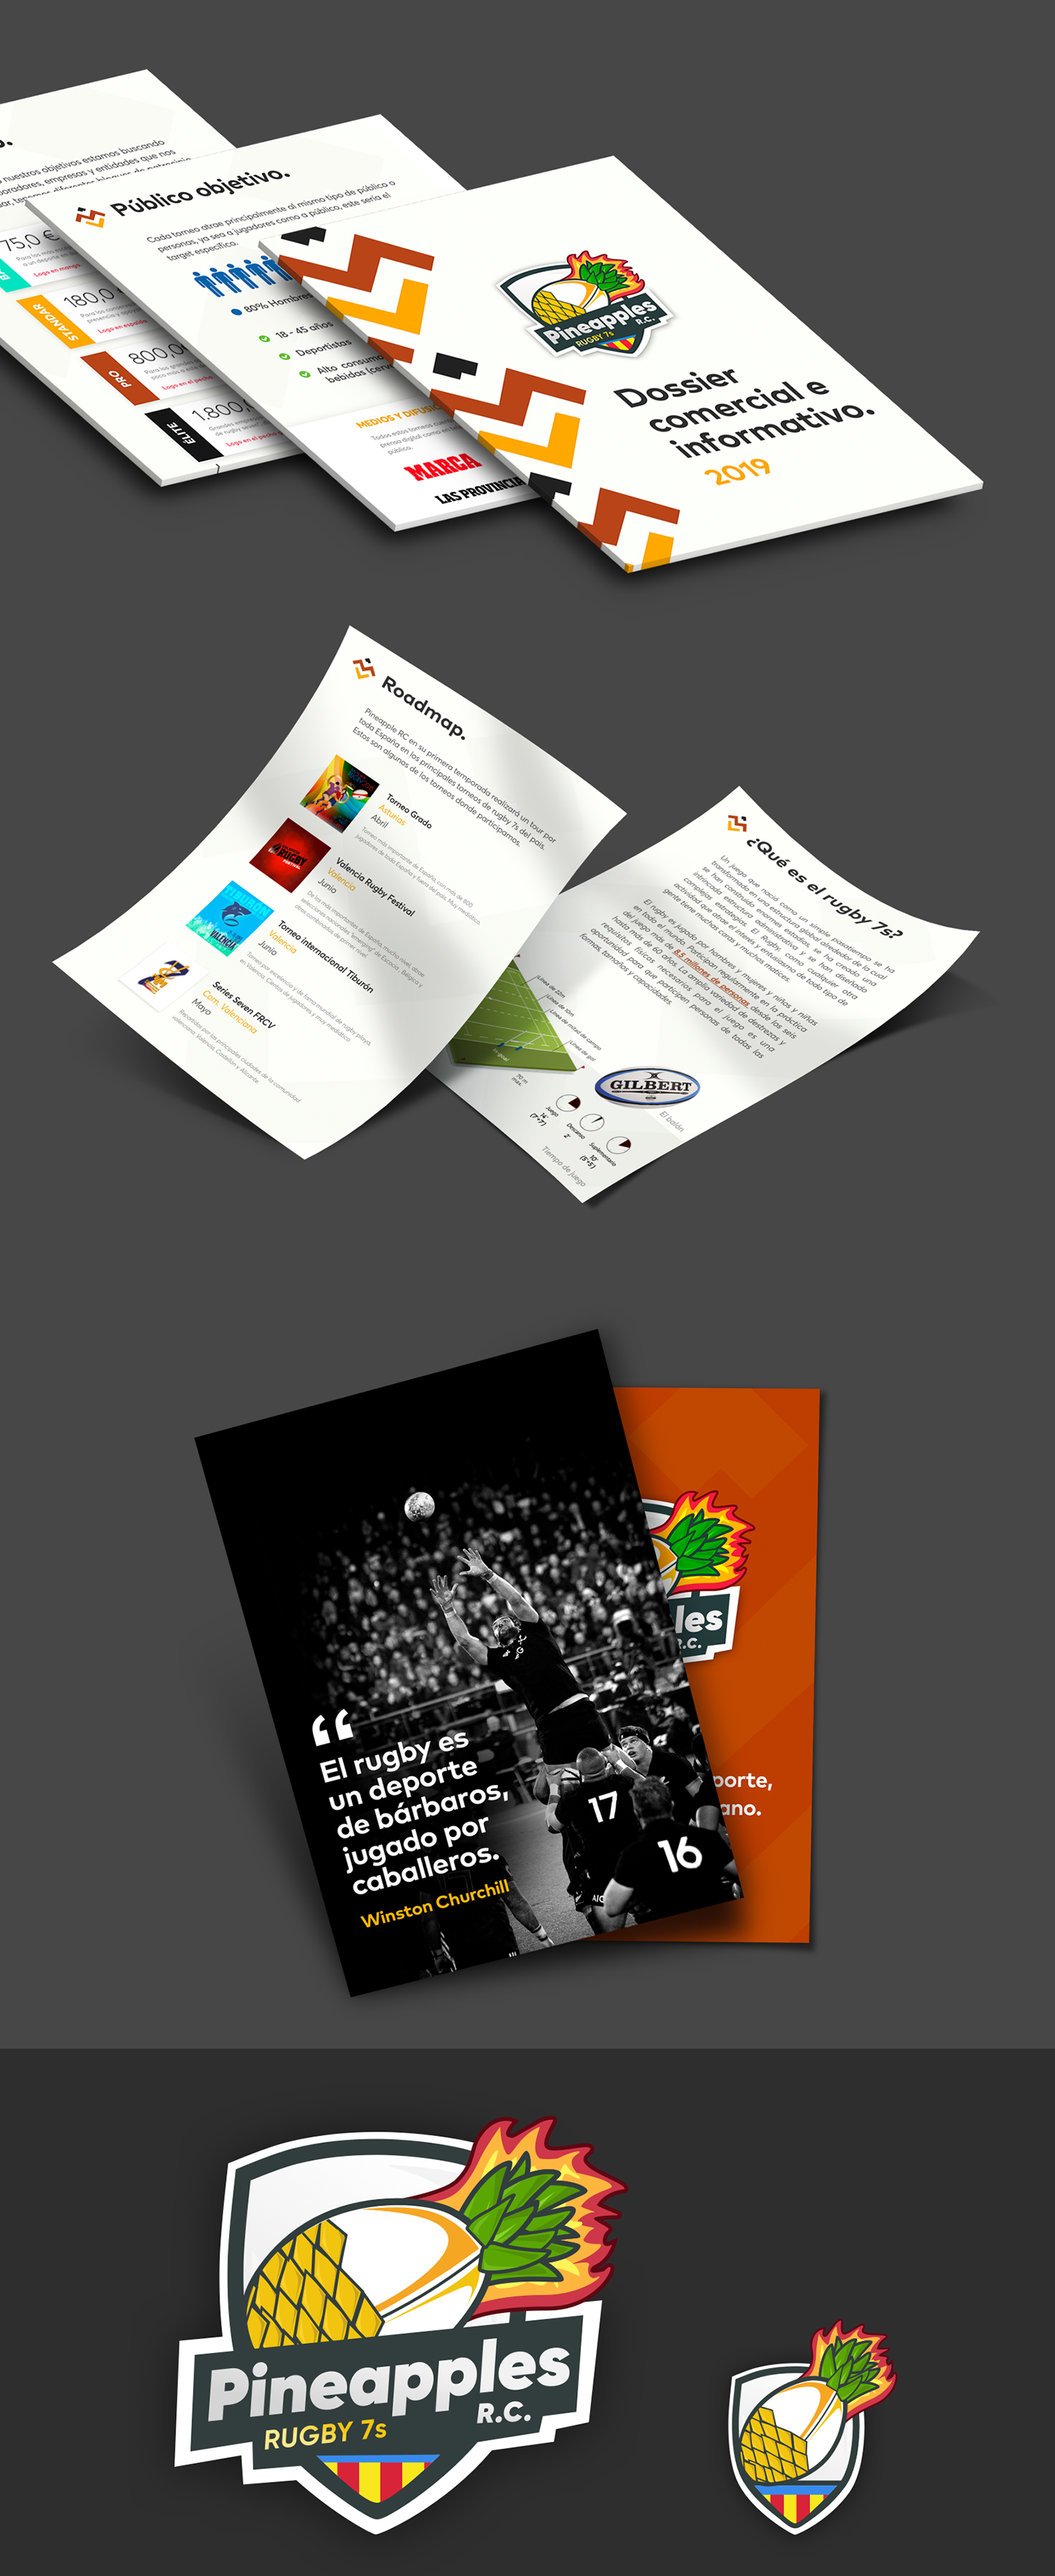 dossier brochure Comercial brochure comercial dossier Rugby rugby comercial rugby dossier pineapples rugby